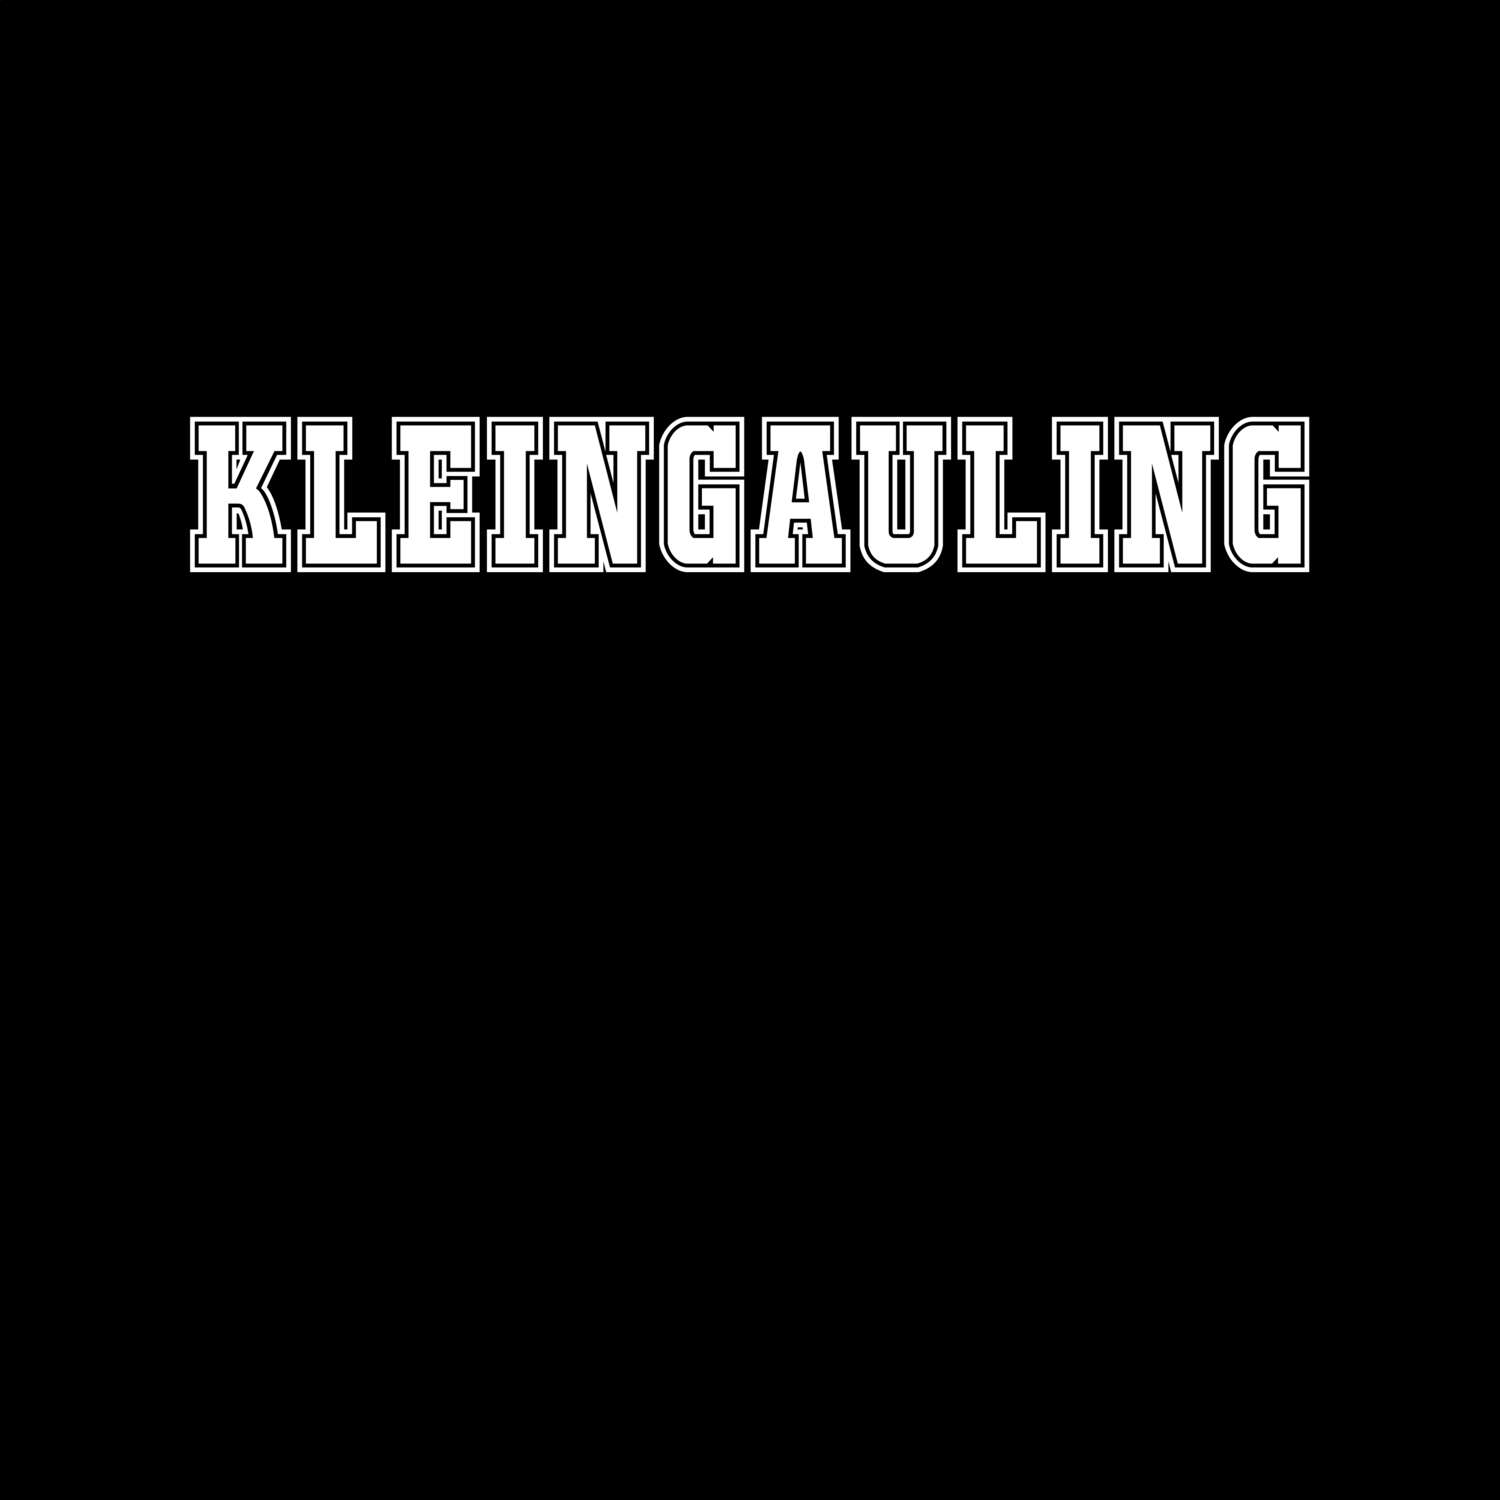 Kleingauling T-Shirt »Classic«